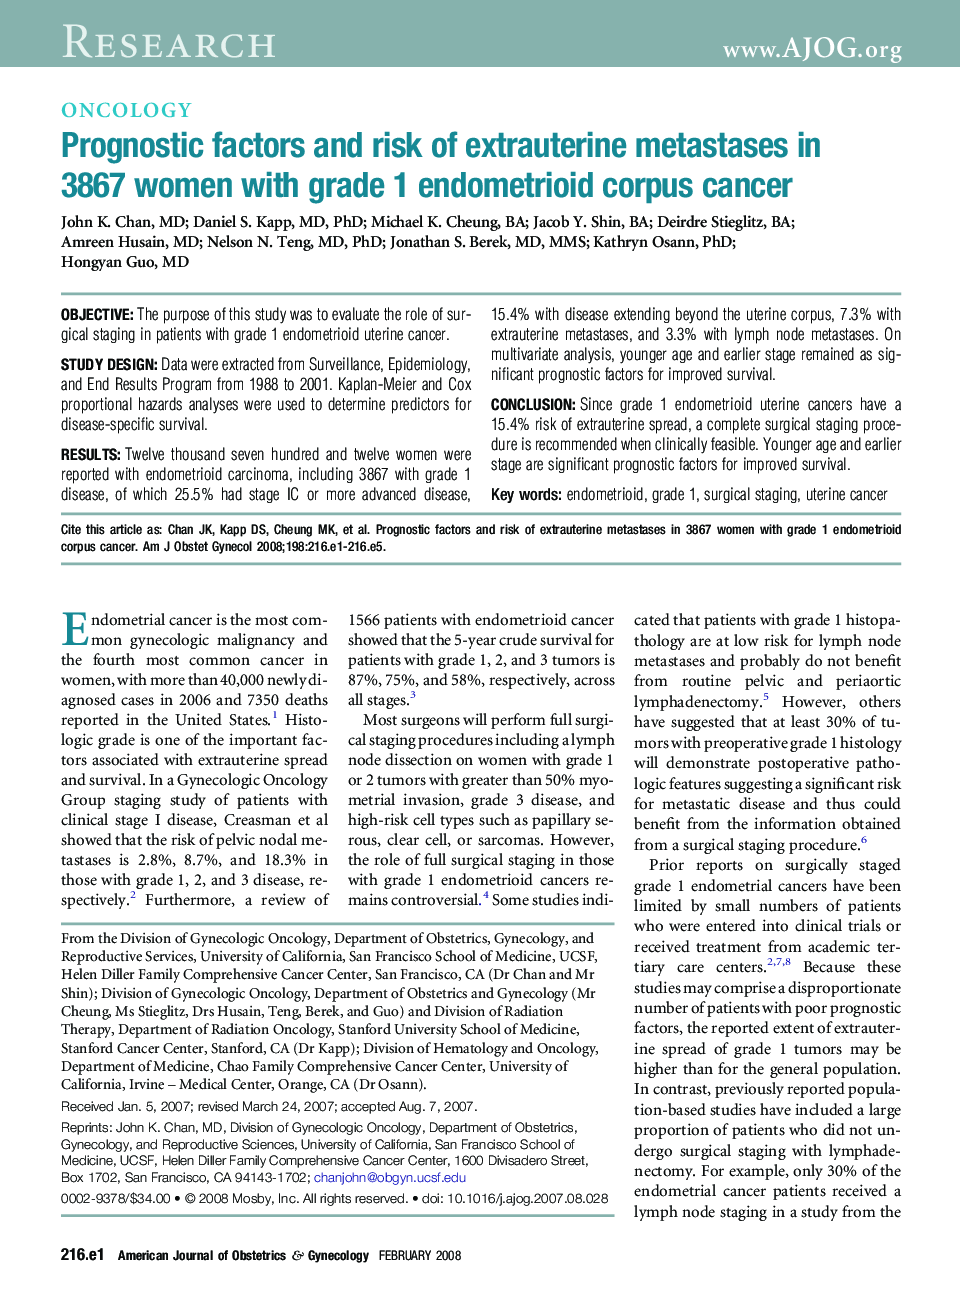 Prognostic factors and risk of extrauterine metastases in 3867 women with grade 1 endometrioid corpus cancer